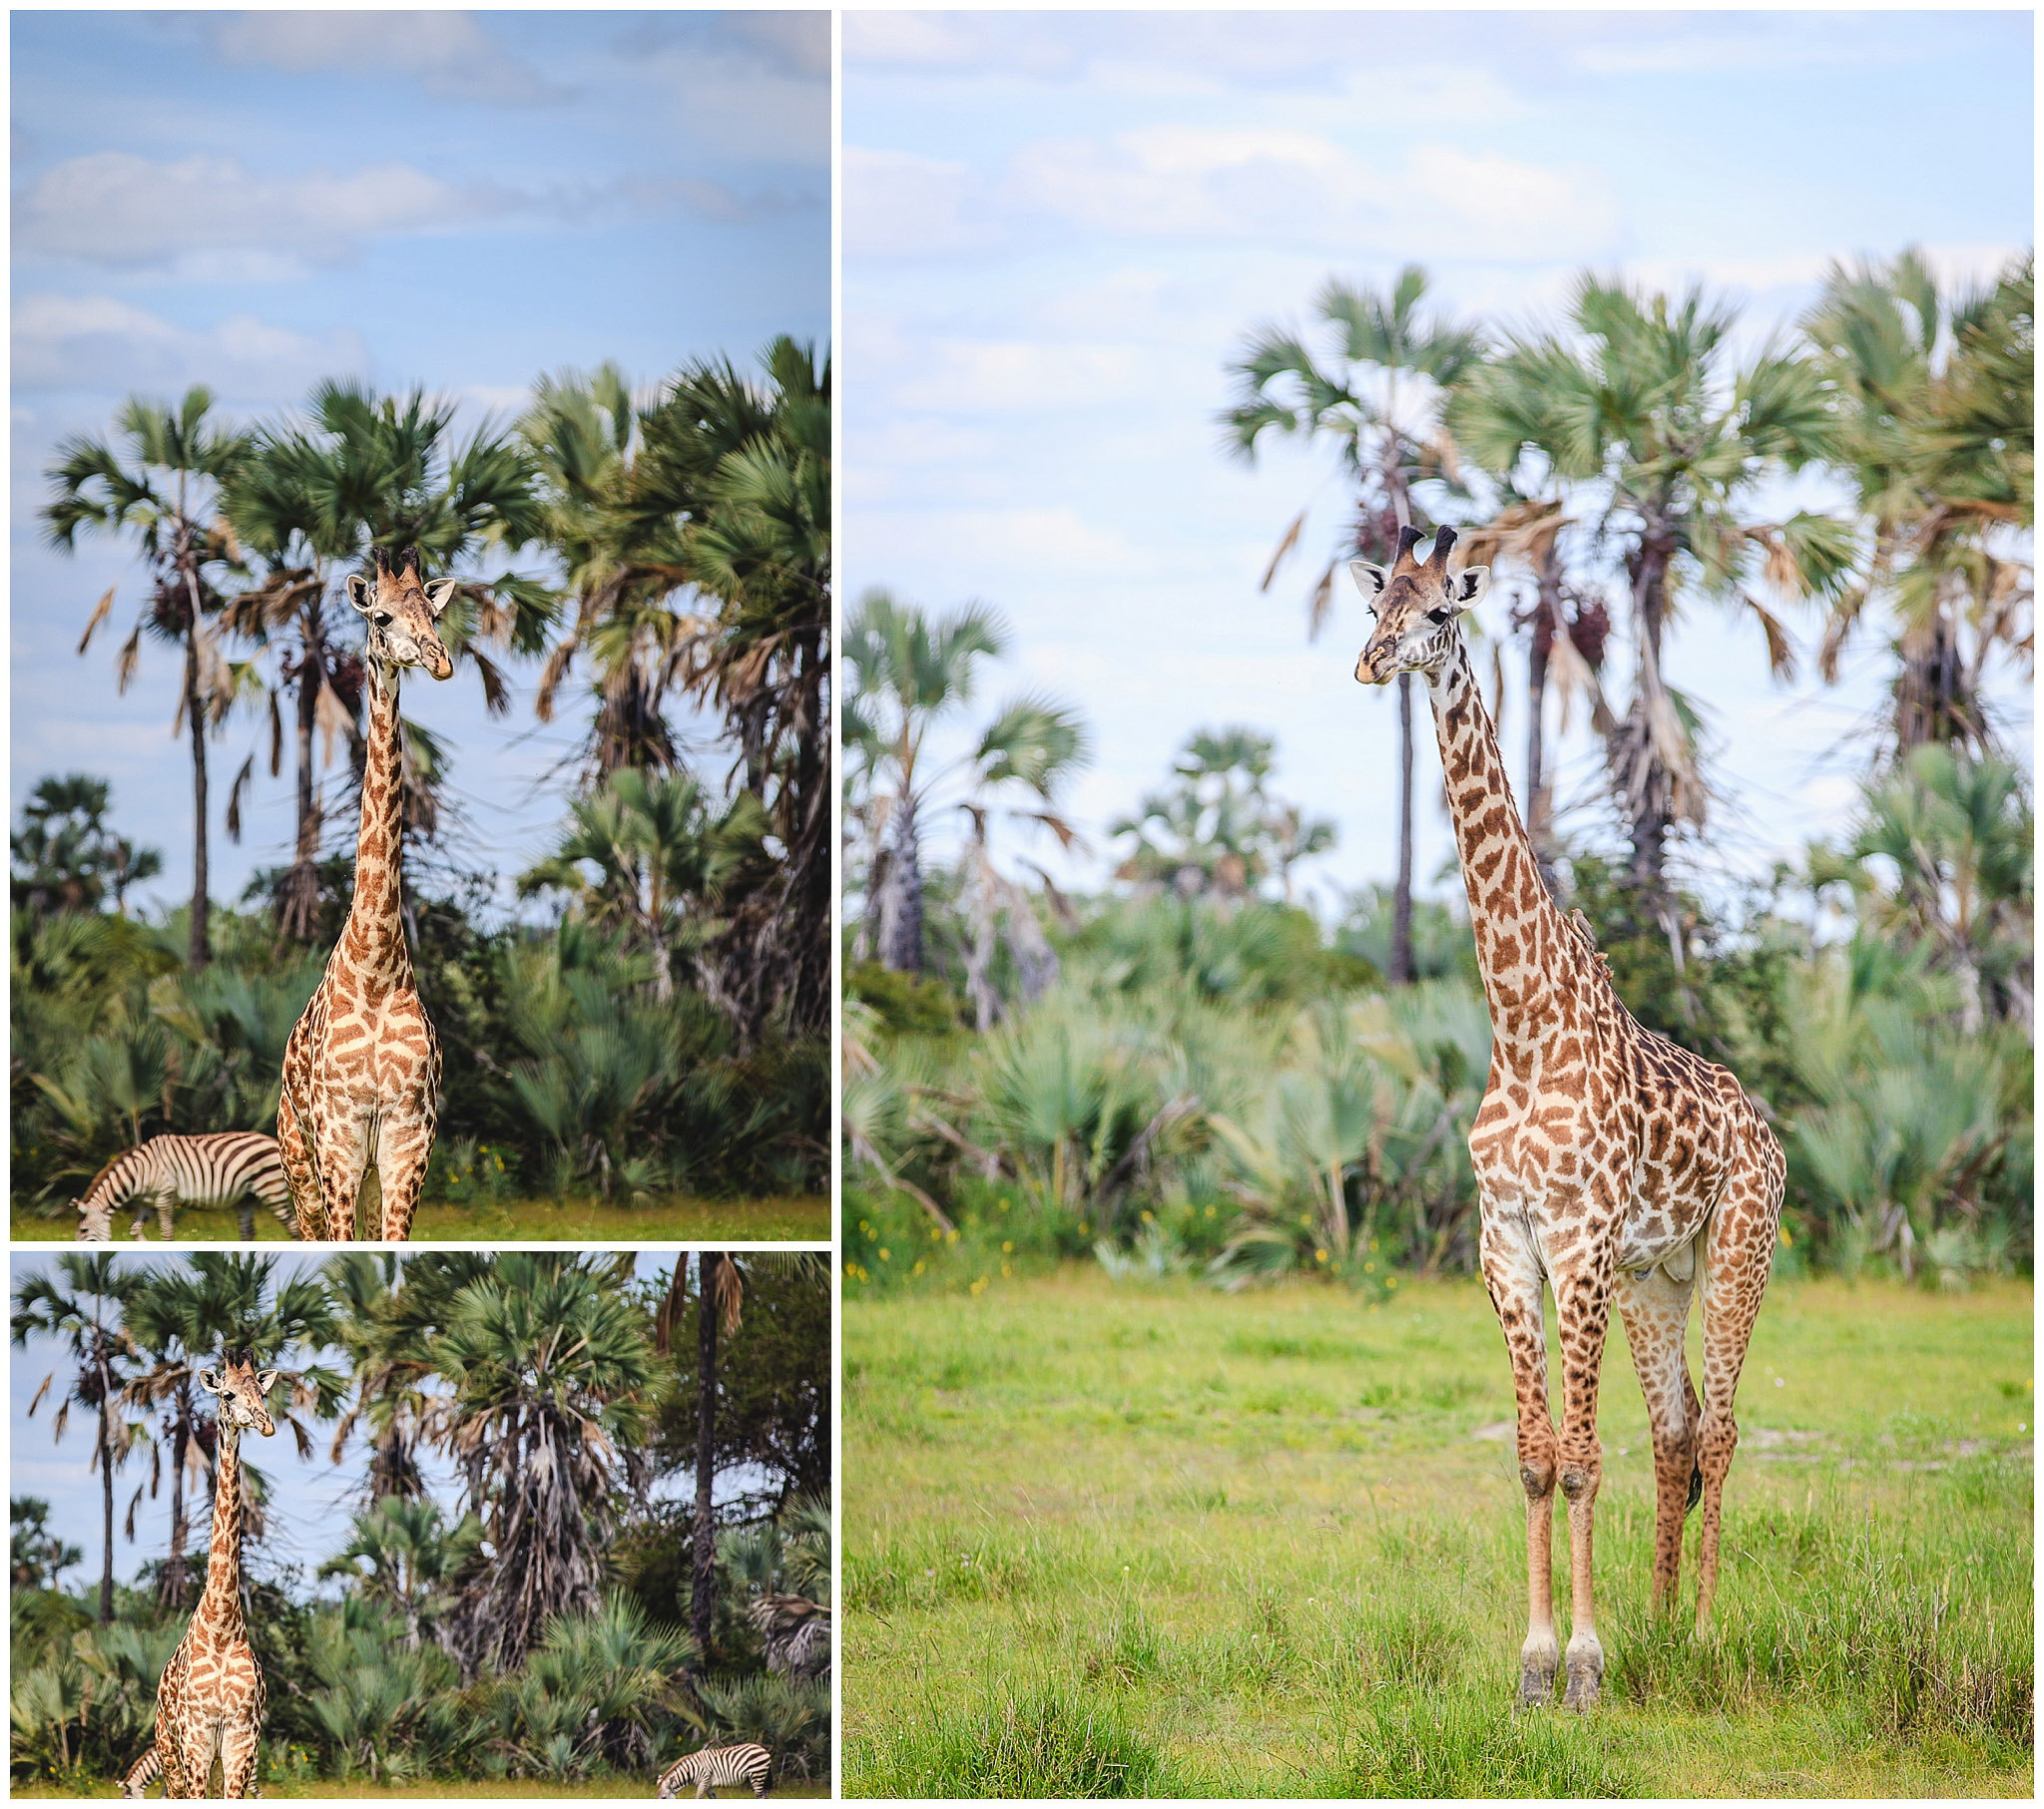 Giraffes standing in Tarangire National Park, Tanzania, Africa